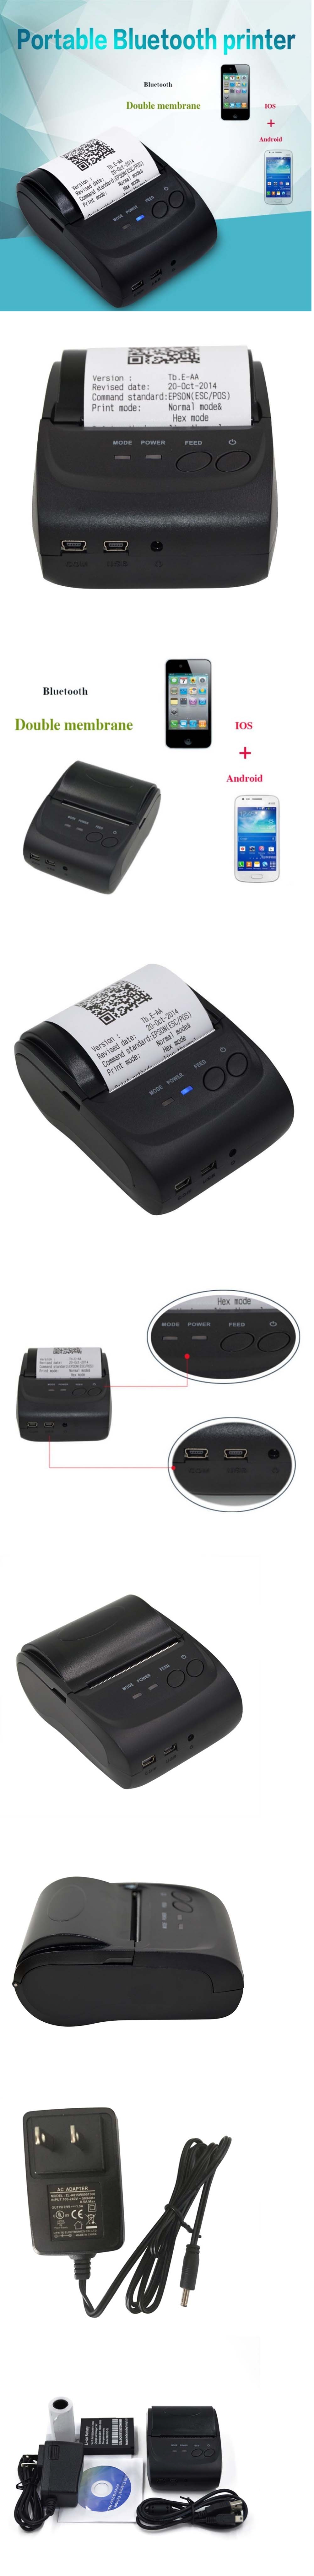 Bluetooth-Thermal-Receipt-Printer-Pocket-Printer-POS-Thermal-Receipt-Printer-For-IOS-Android-Windows-1364644